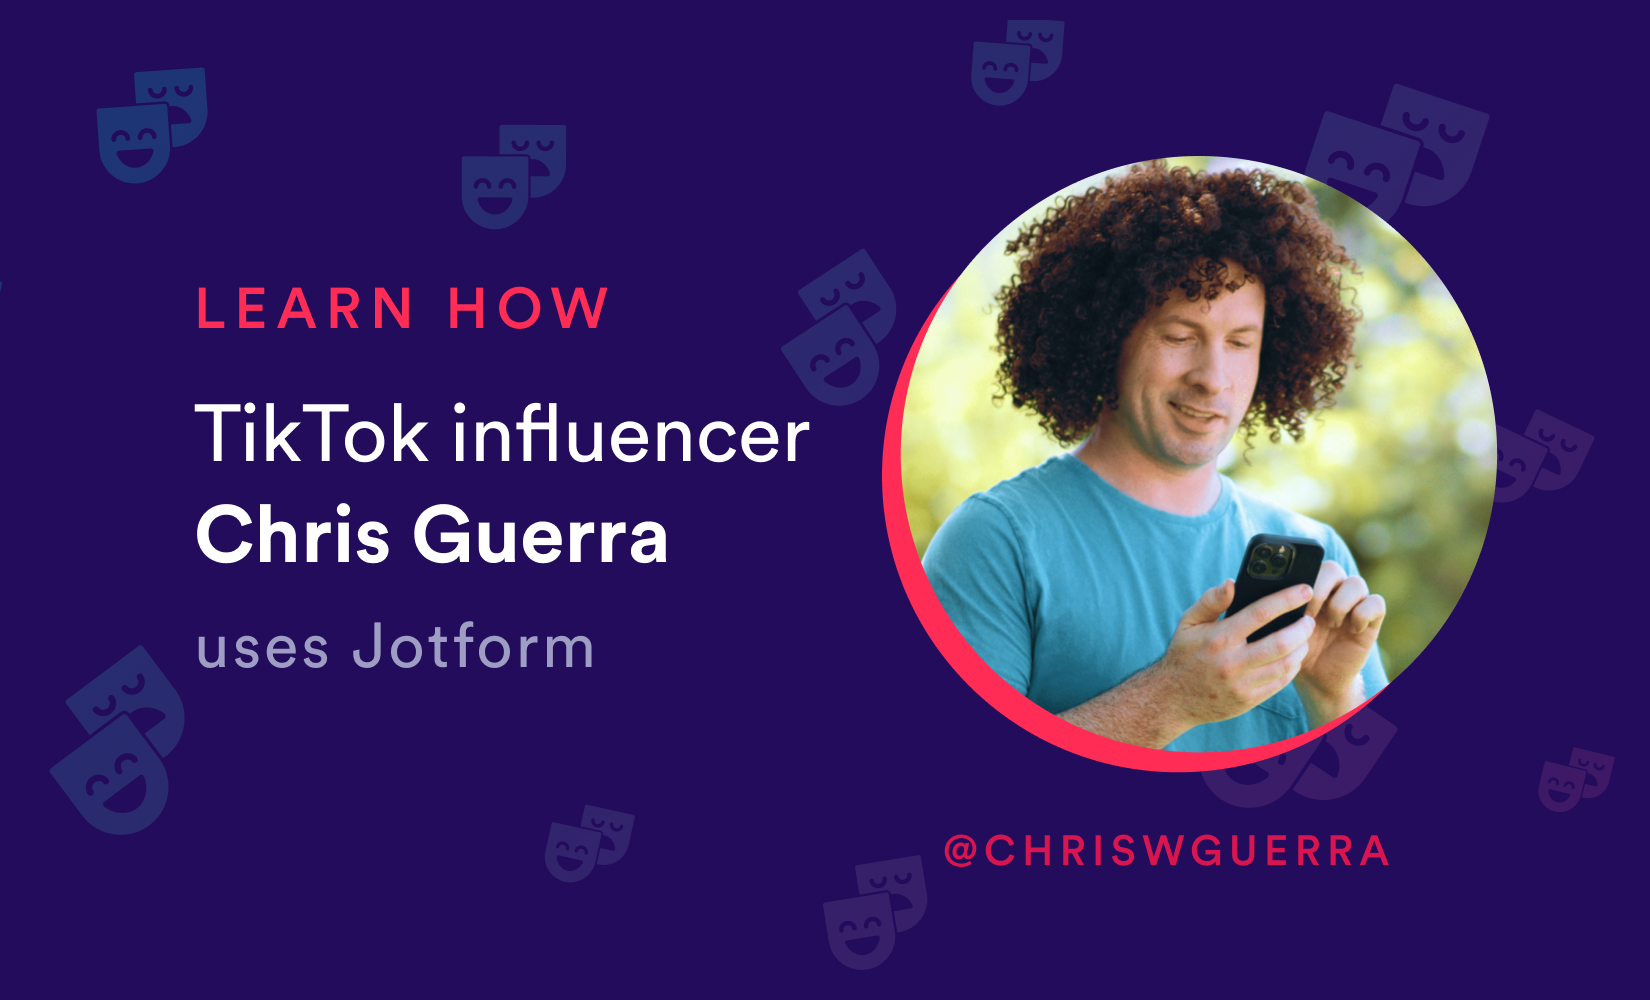 How TikTok influencer Chris Guerra connects with followers through Jotform